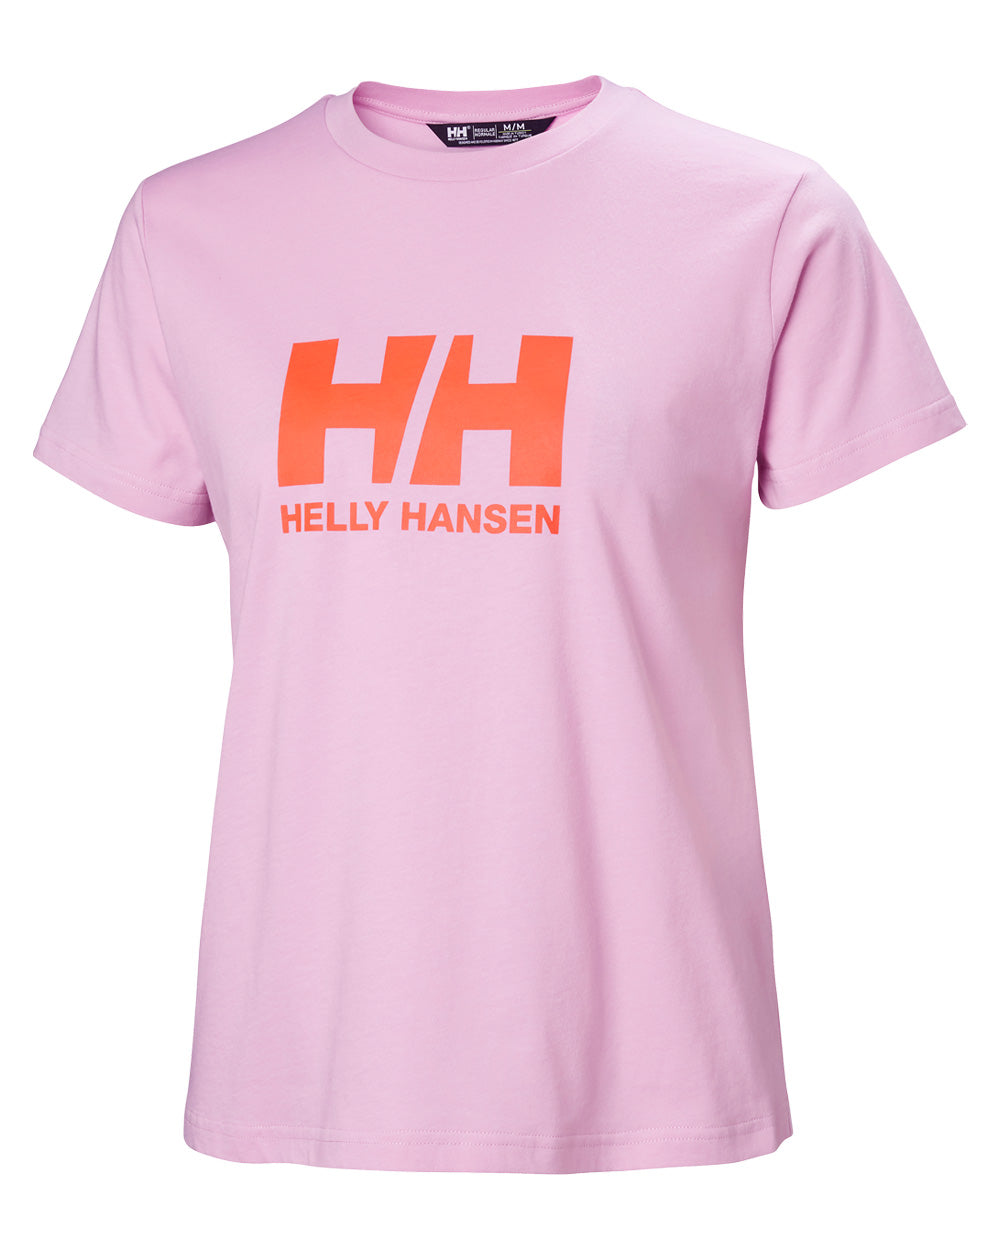 Cherry Blossom coloured Helly Hansen Womens T-Shirt on white background 